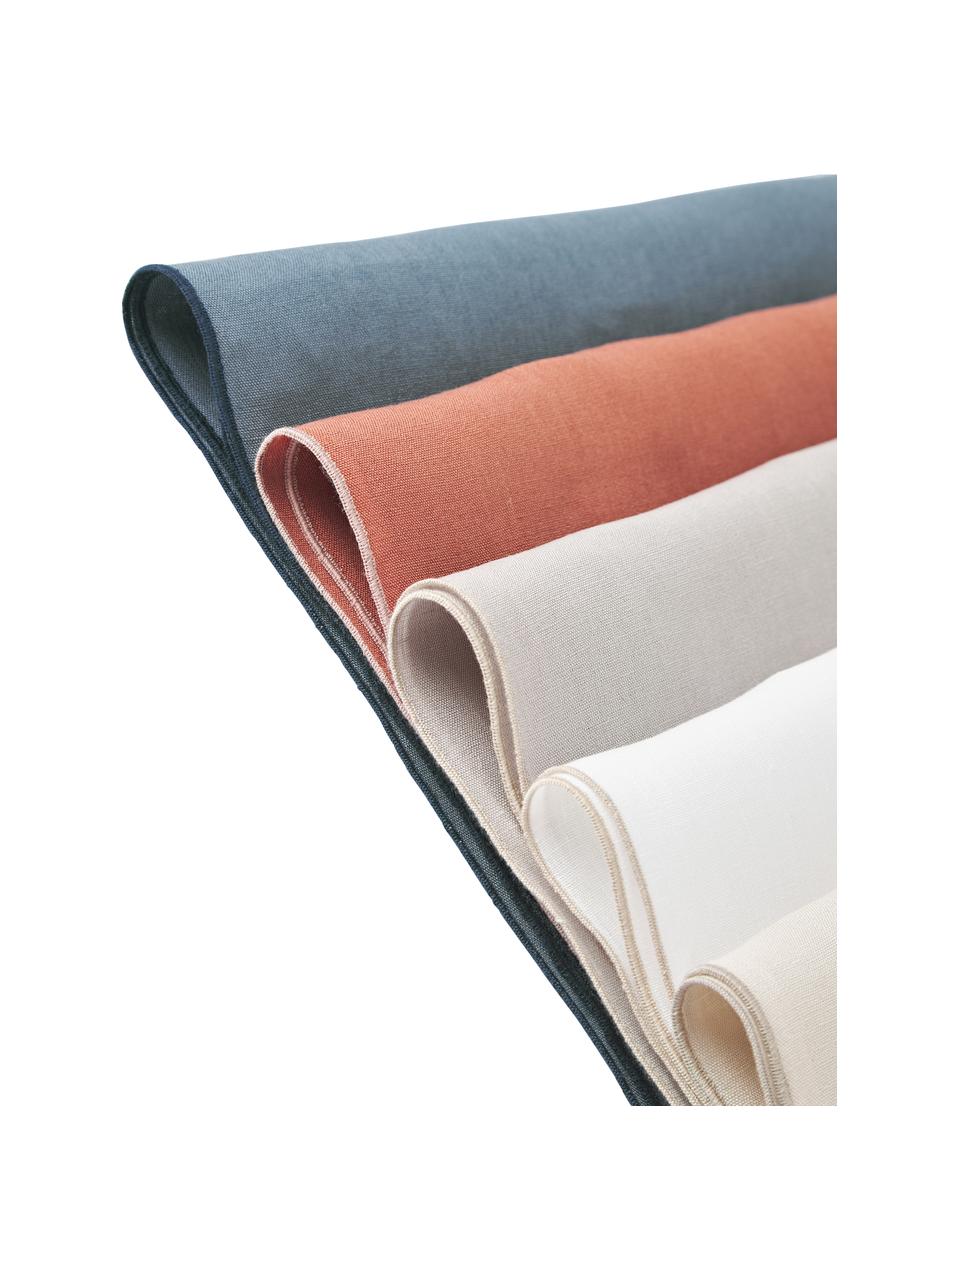 Camino de mesa de lino con ribete Kennedy, 100% lino lavado con certificado European Flax, Blanco, An 40 x L 150 cm